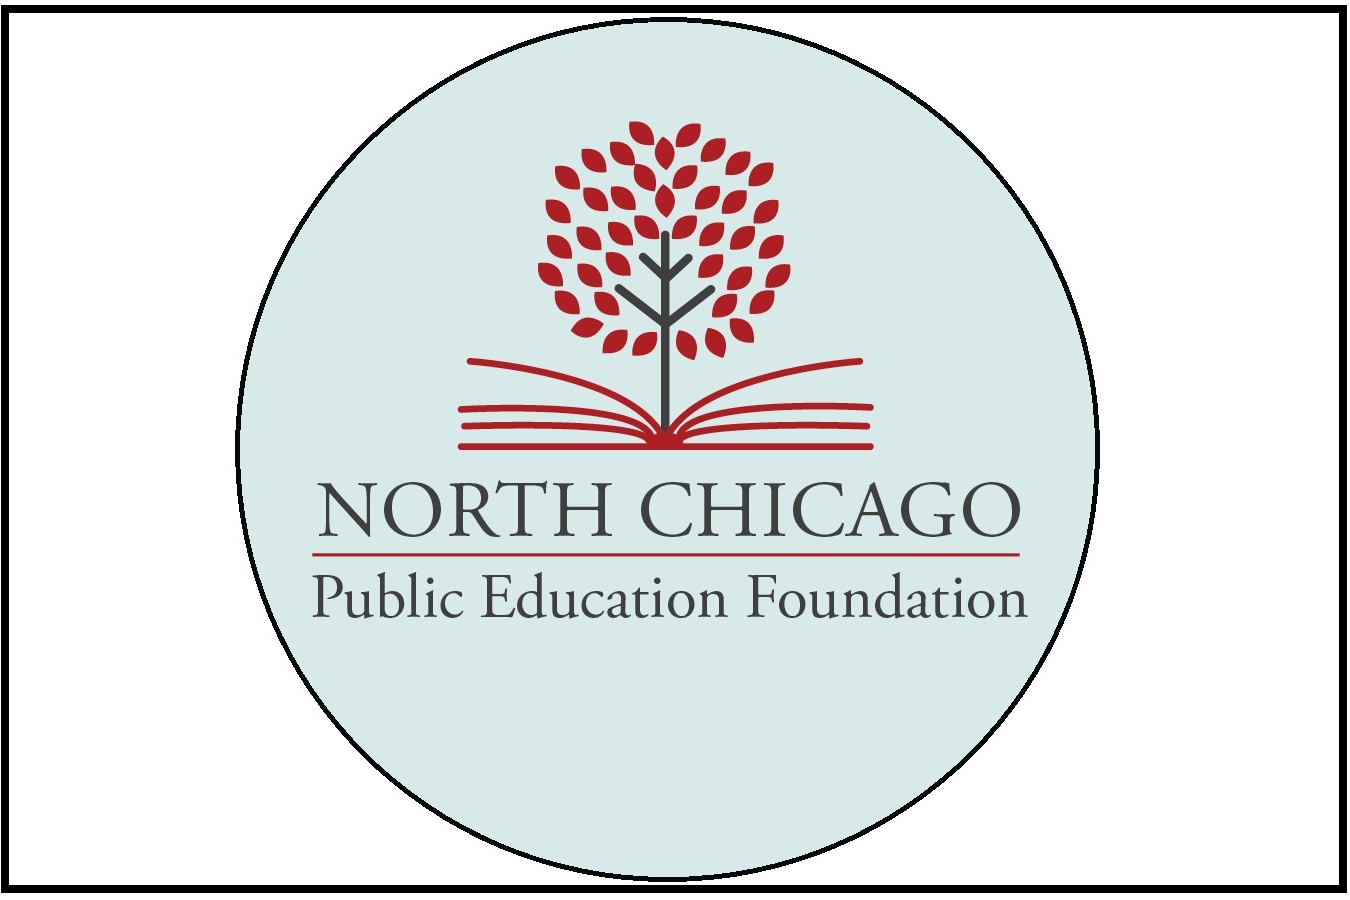 North Chicago Public Education Foundation